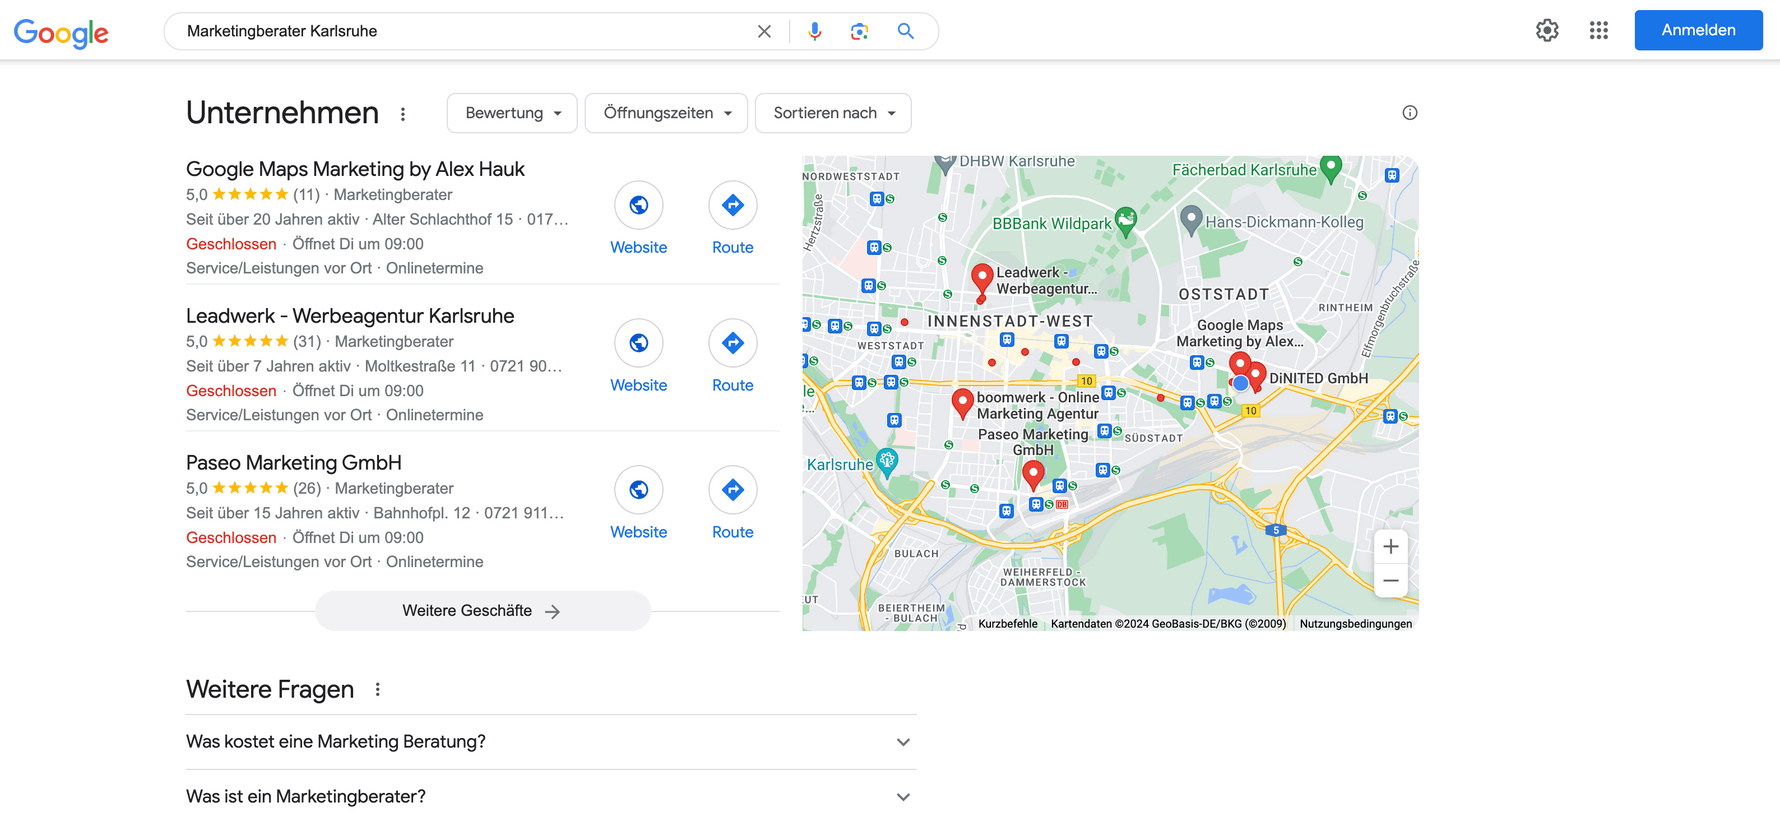 Google Maps Marketing by Alex Hauk in Karlsruhe, Alter Schlachthof 15, 76133 Karlsruhe